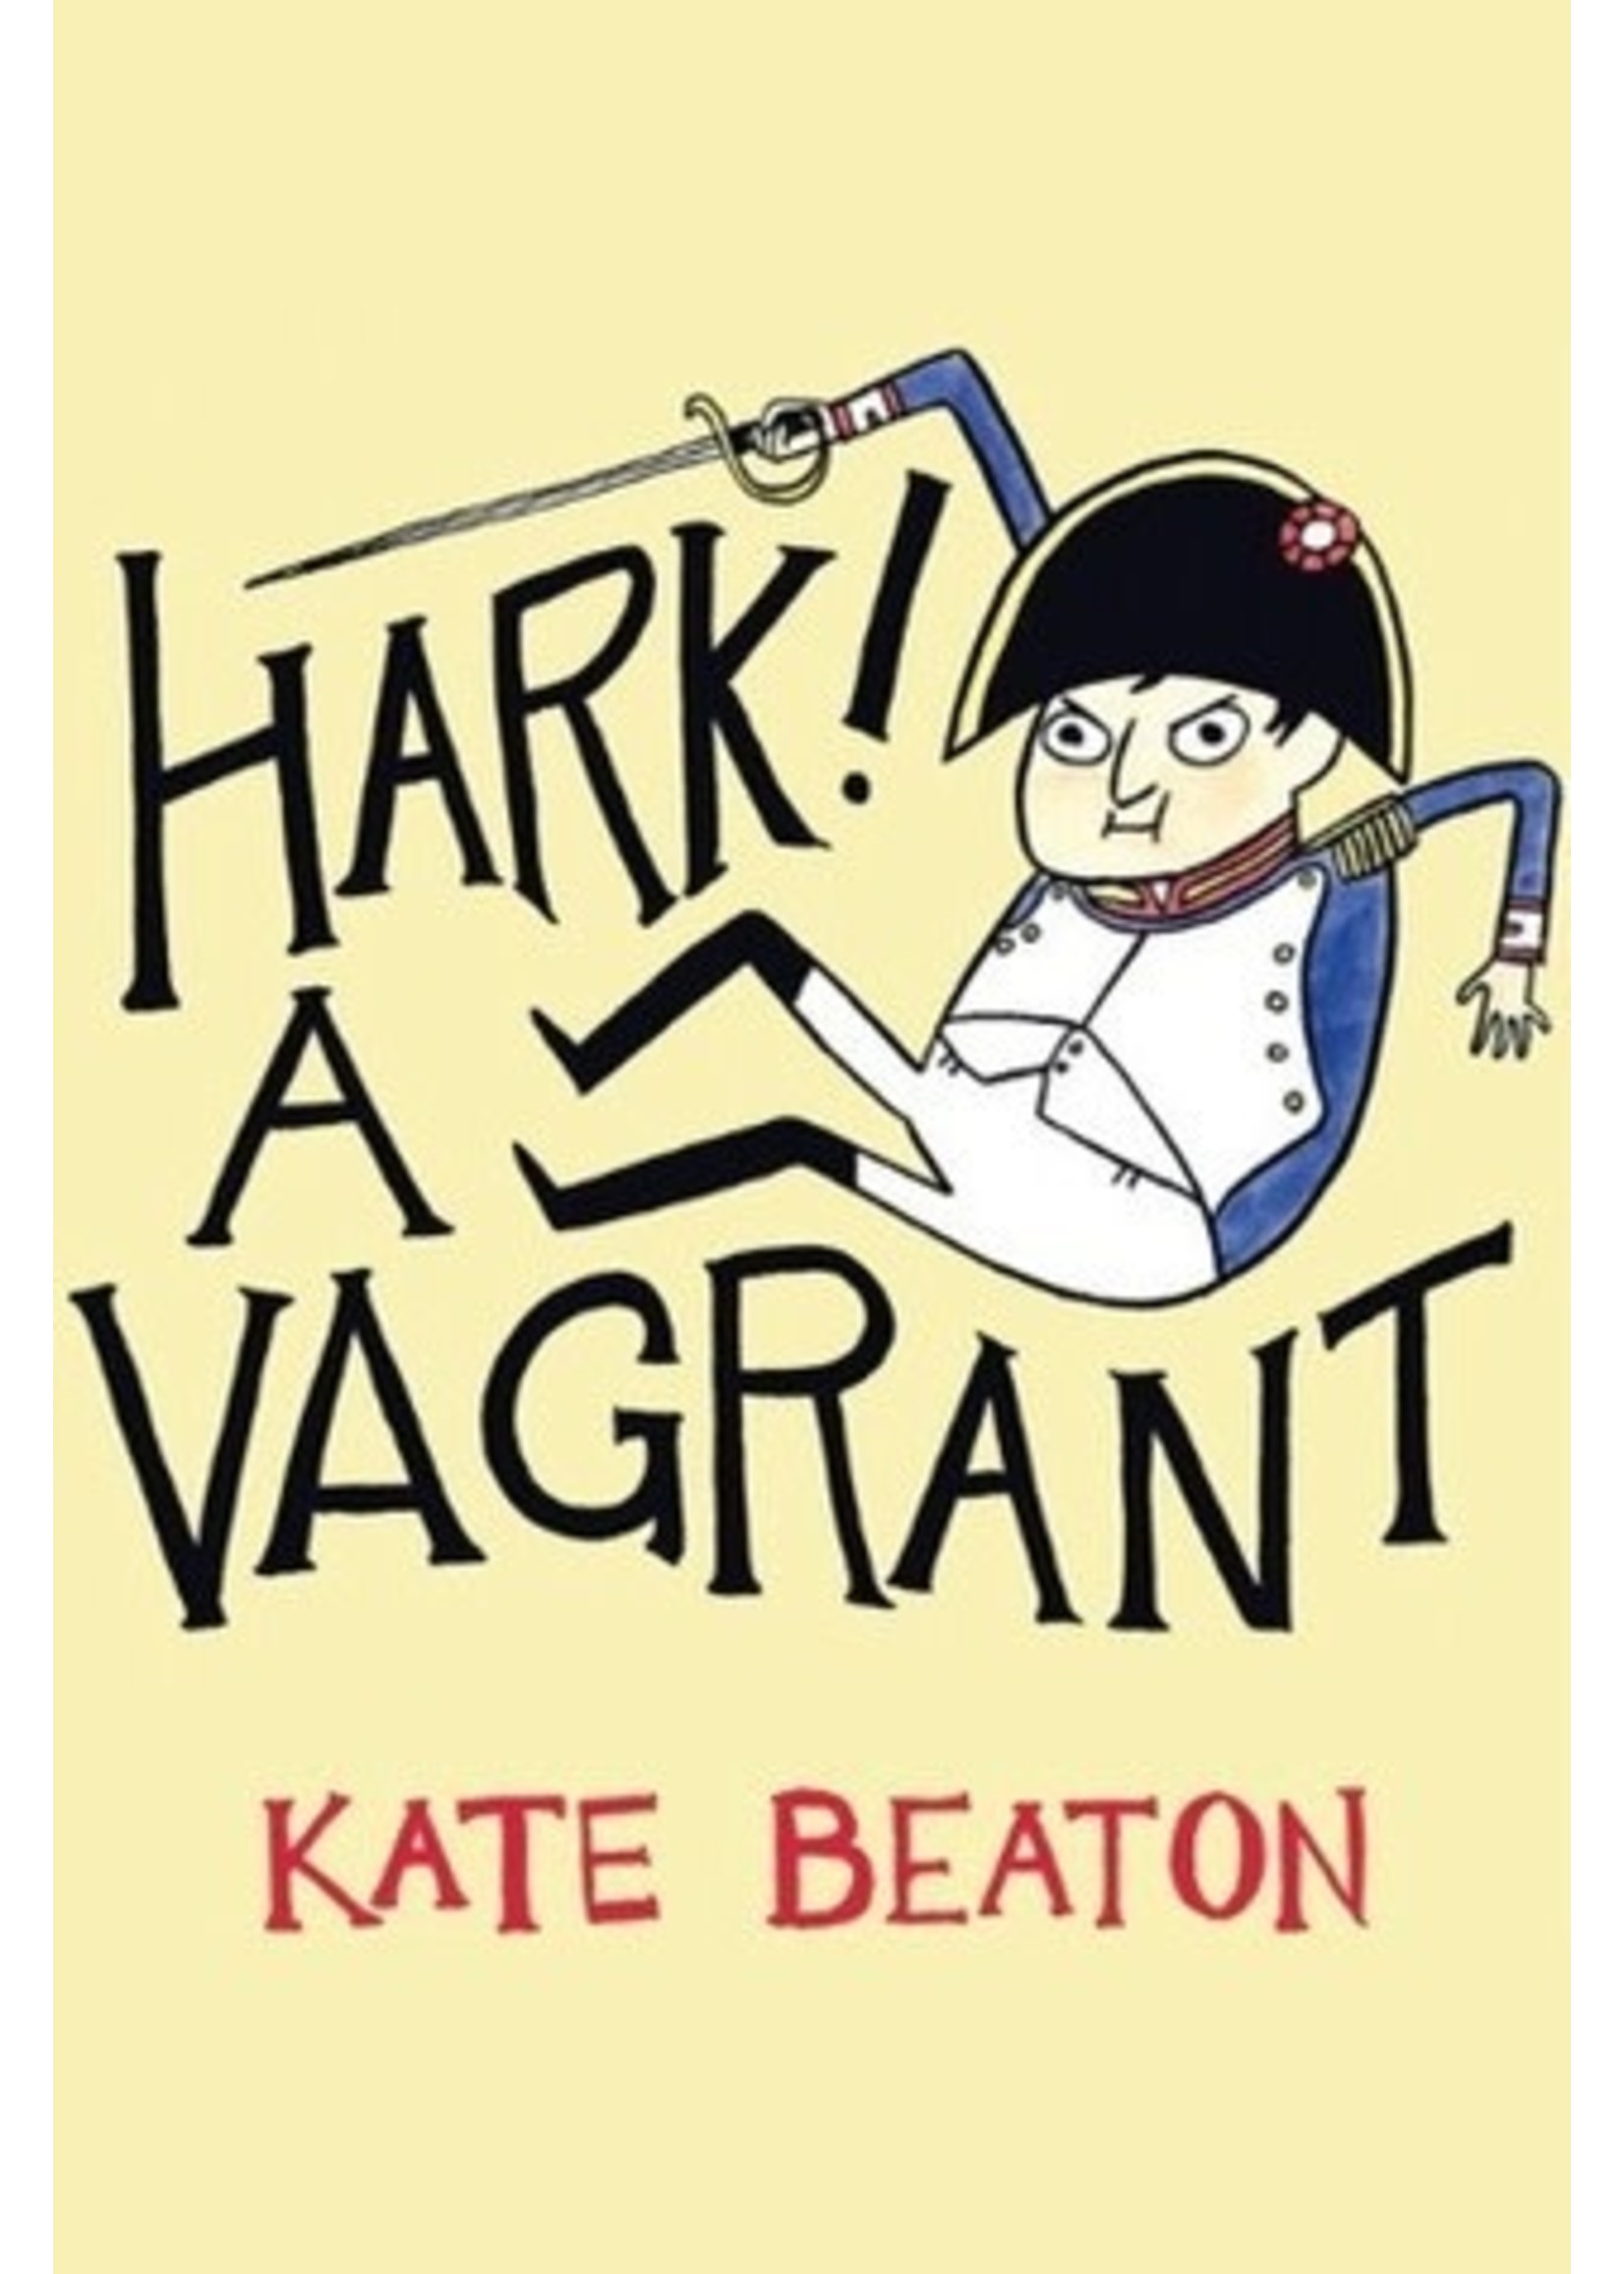 Hark! A Vagrant (Hark! A Vagrant #1) by Kate Beaton